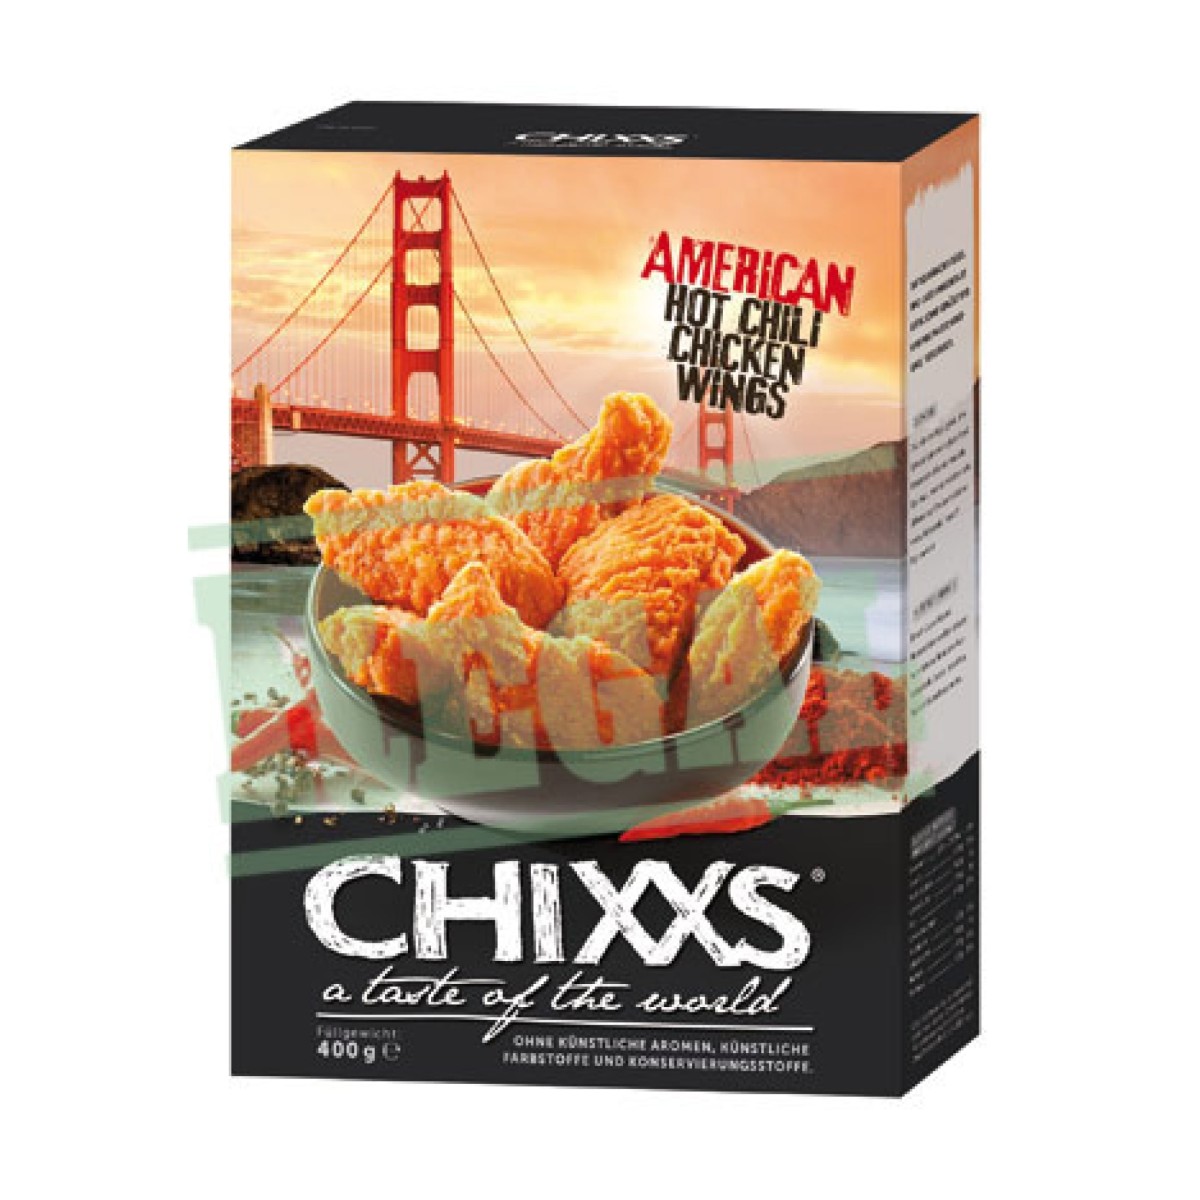 CHIXXS Wings American REGAL Chicken Chili Hot →